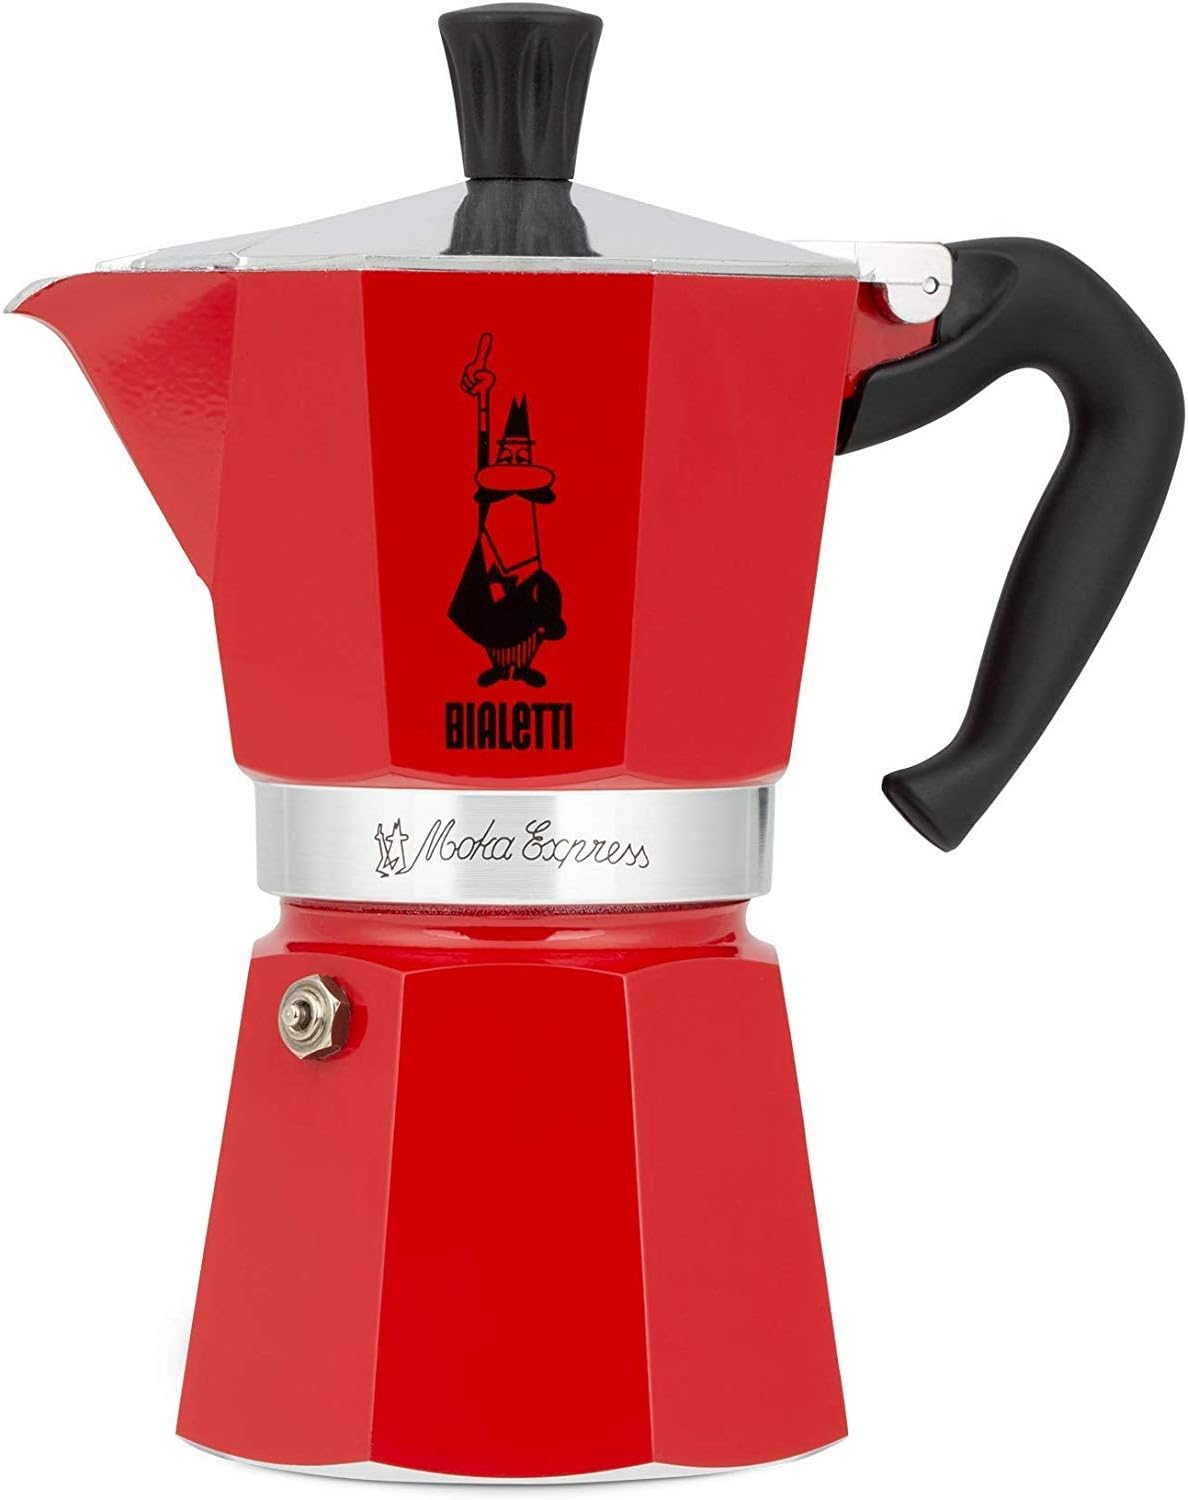 Bialetti - Moka Espress: Iconic Stovetop Espresso Maker, Makes Real Italian Coffee, Moka Pot 6 Cups (6 Oz), Aluminium, Red